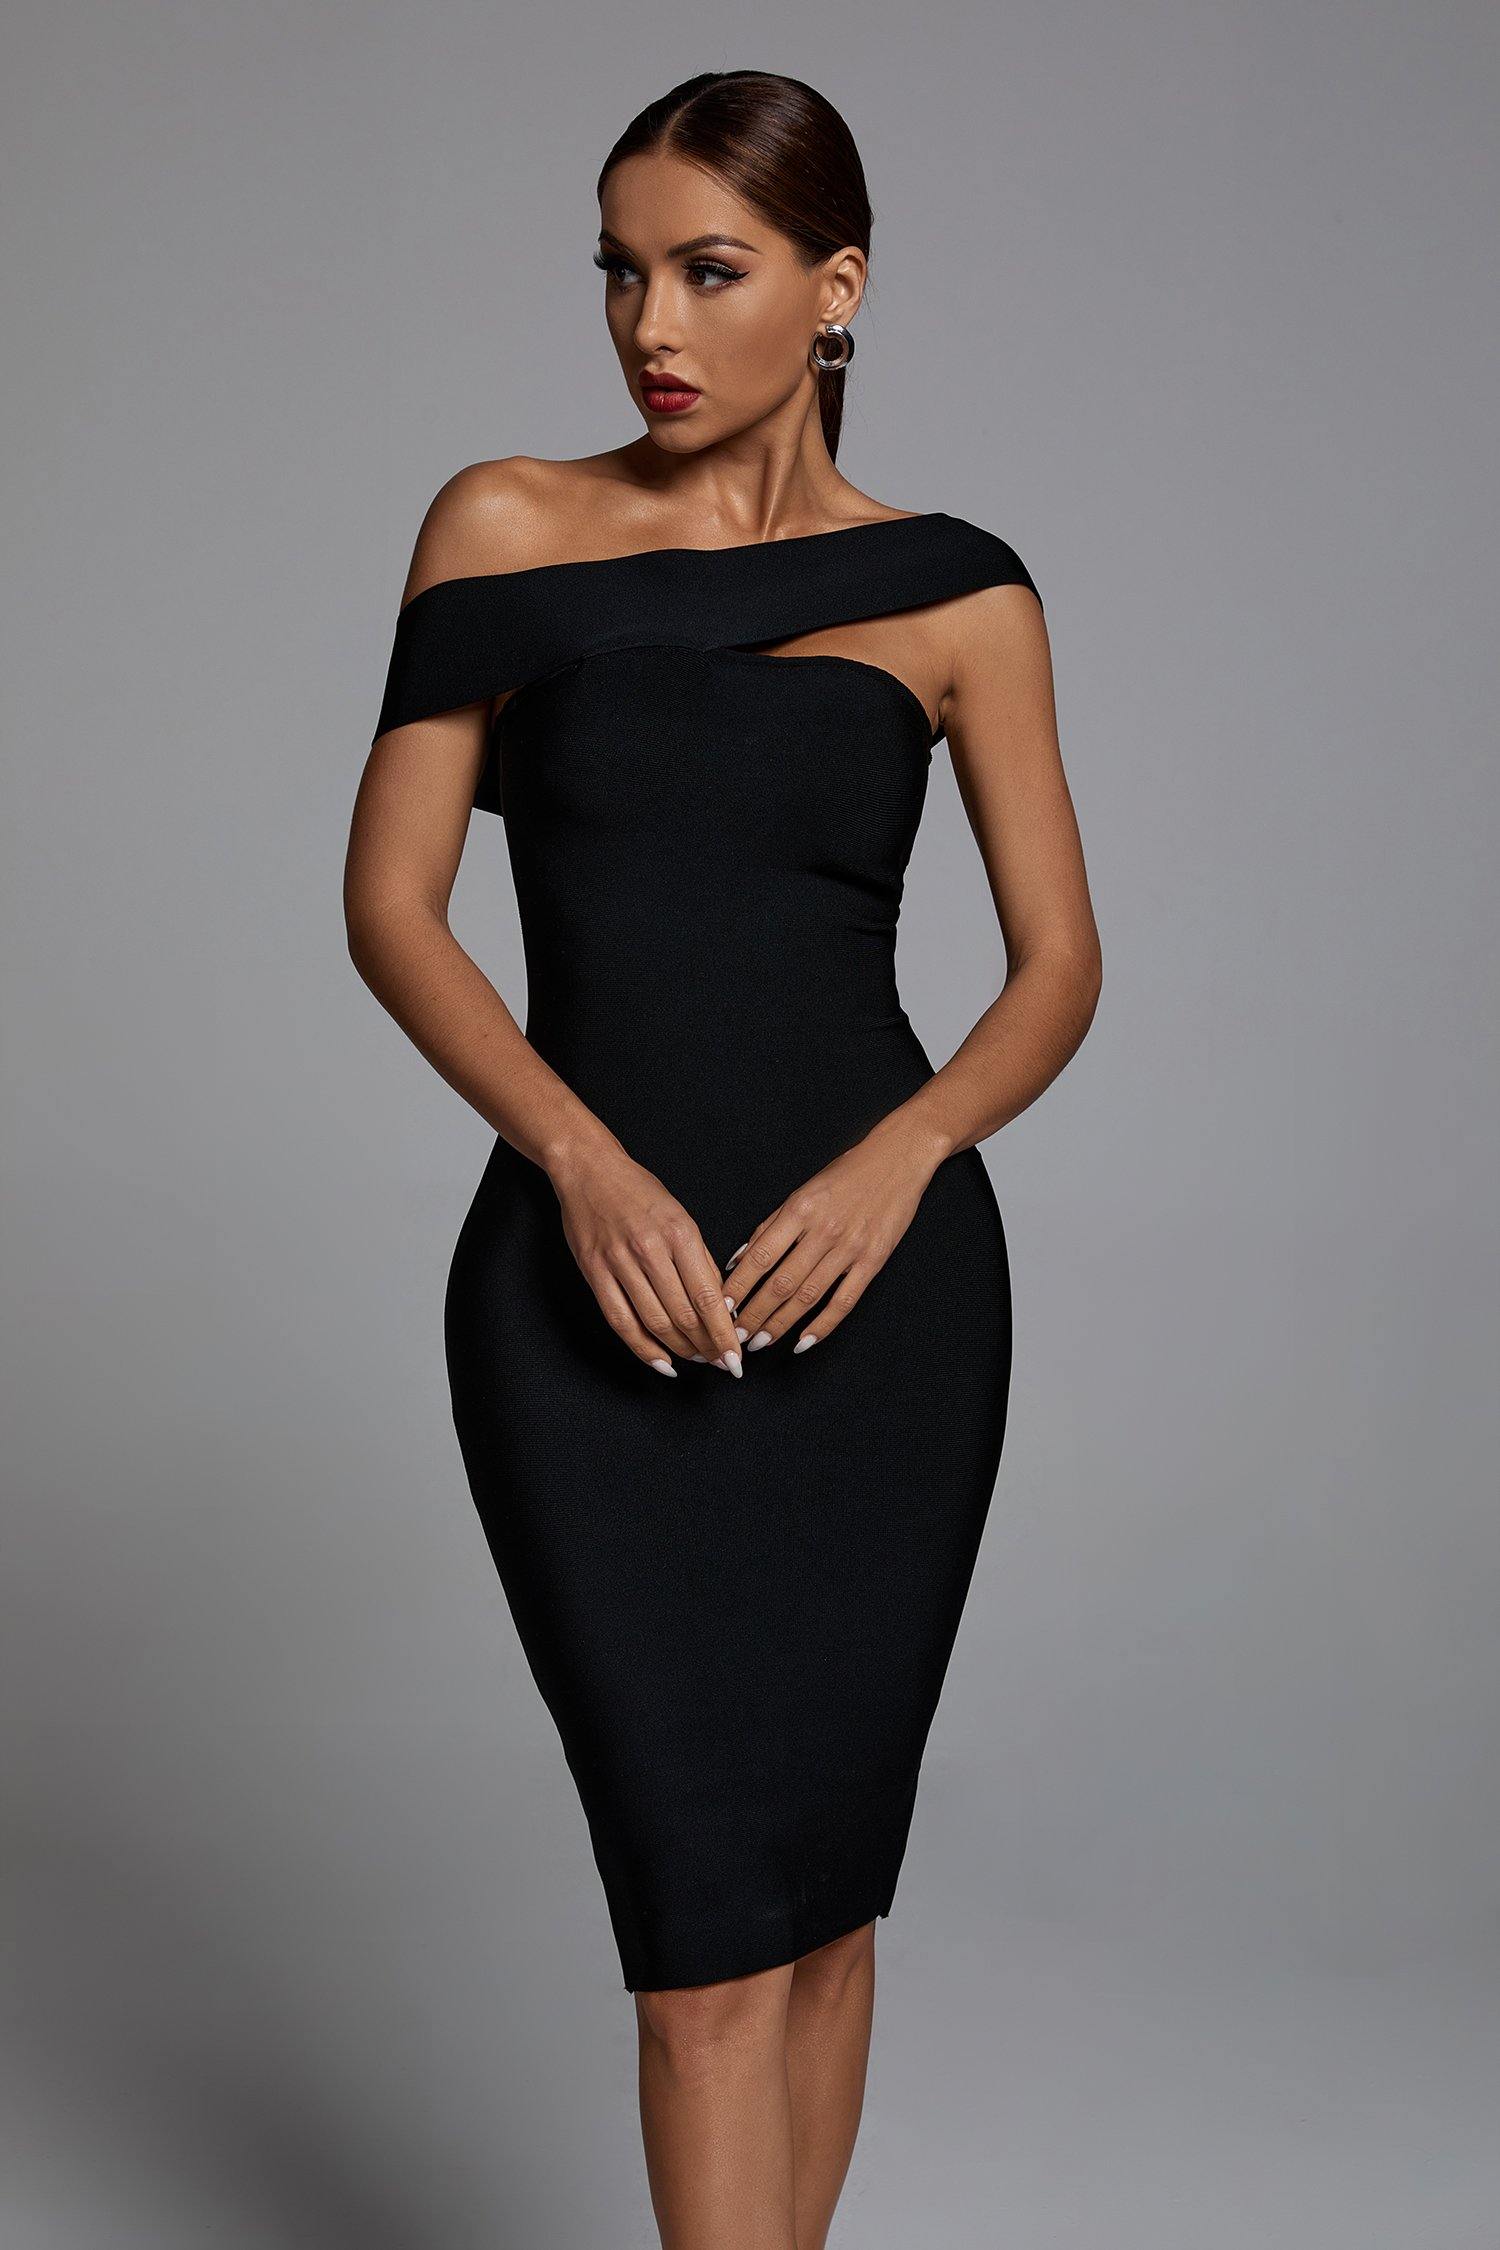 Buy Dressystar 0042 Lace Off Shoulder Cocktail Hi-Lo Bridesmaid Swing Dress  Black XS at Amazon.in